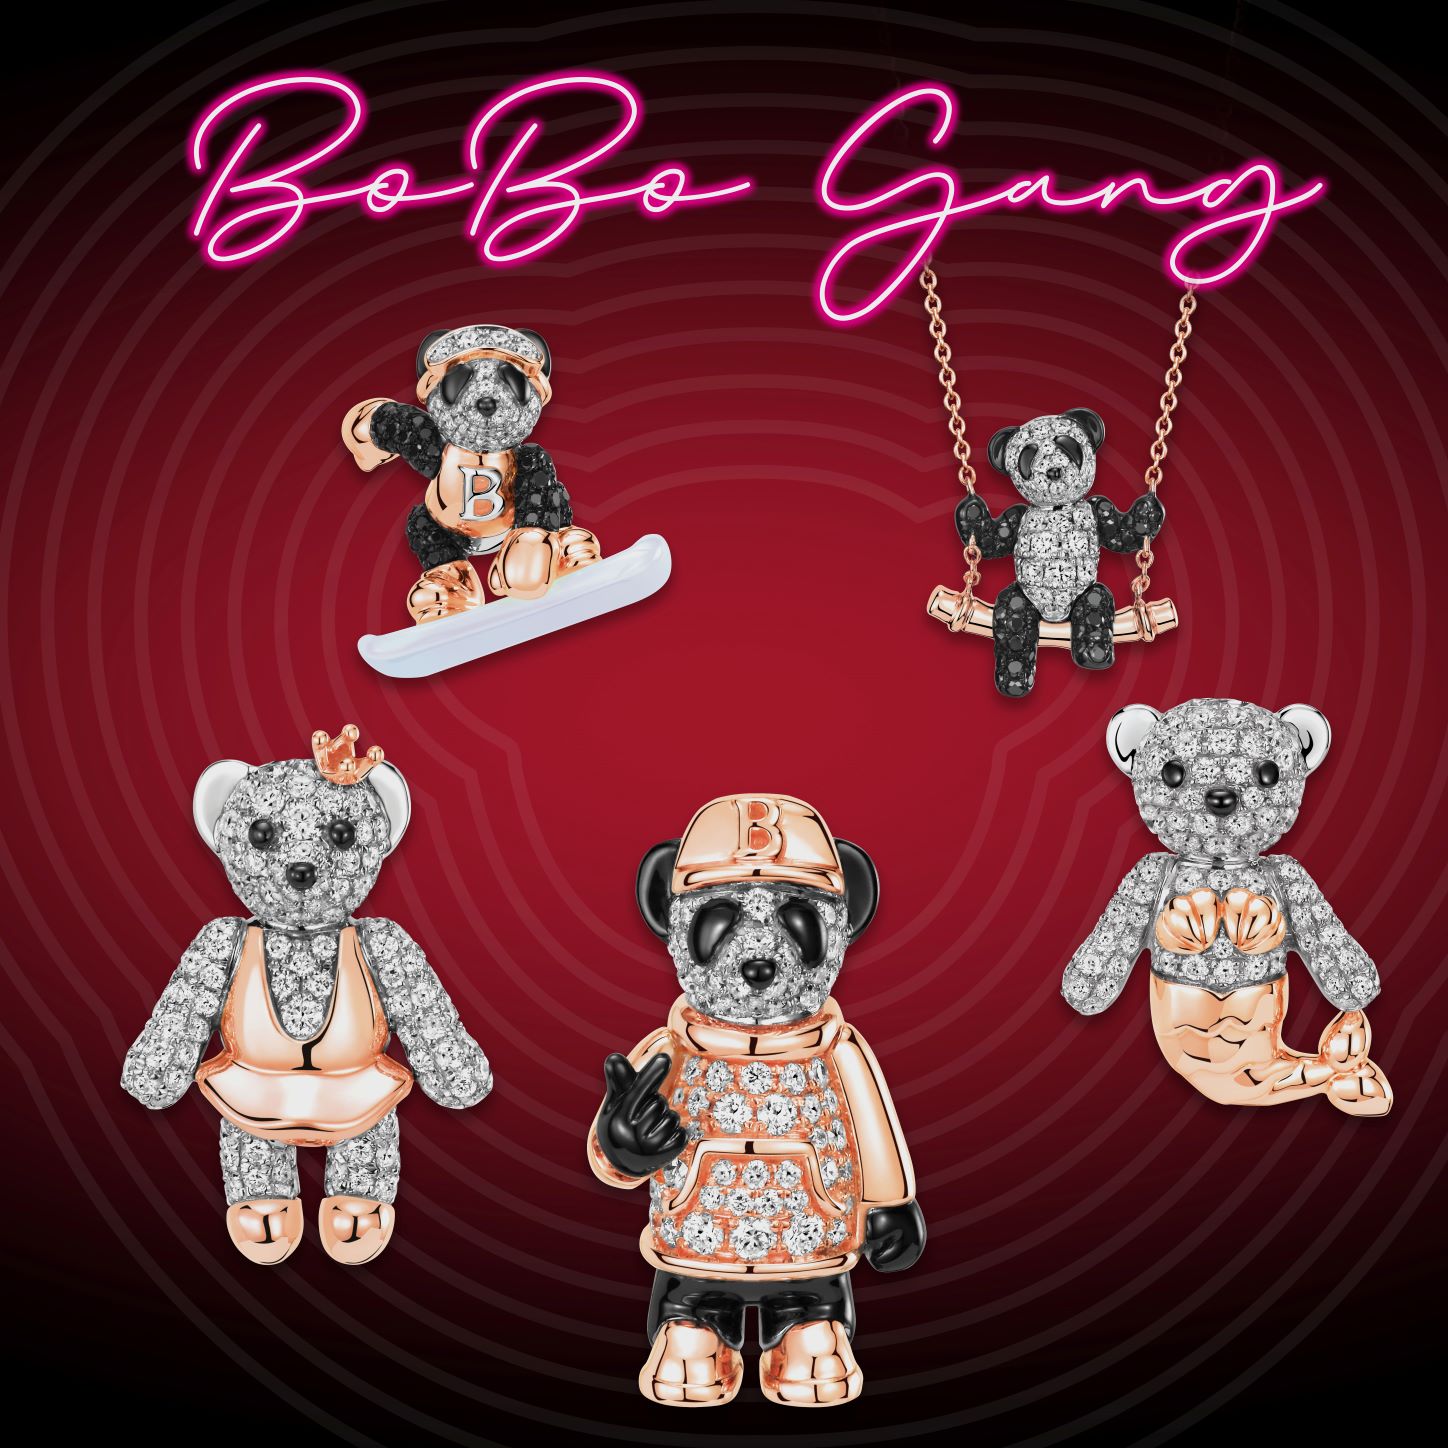 Qeelin miniatures bring smiles this holiday season － Meet the sparkling Bo Bo Gang